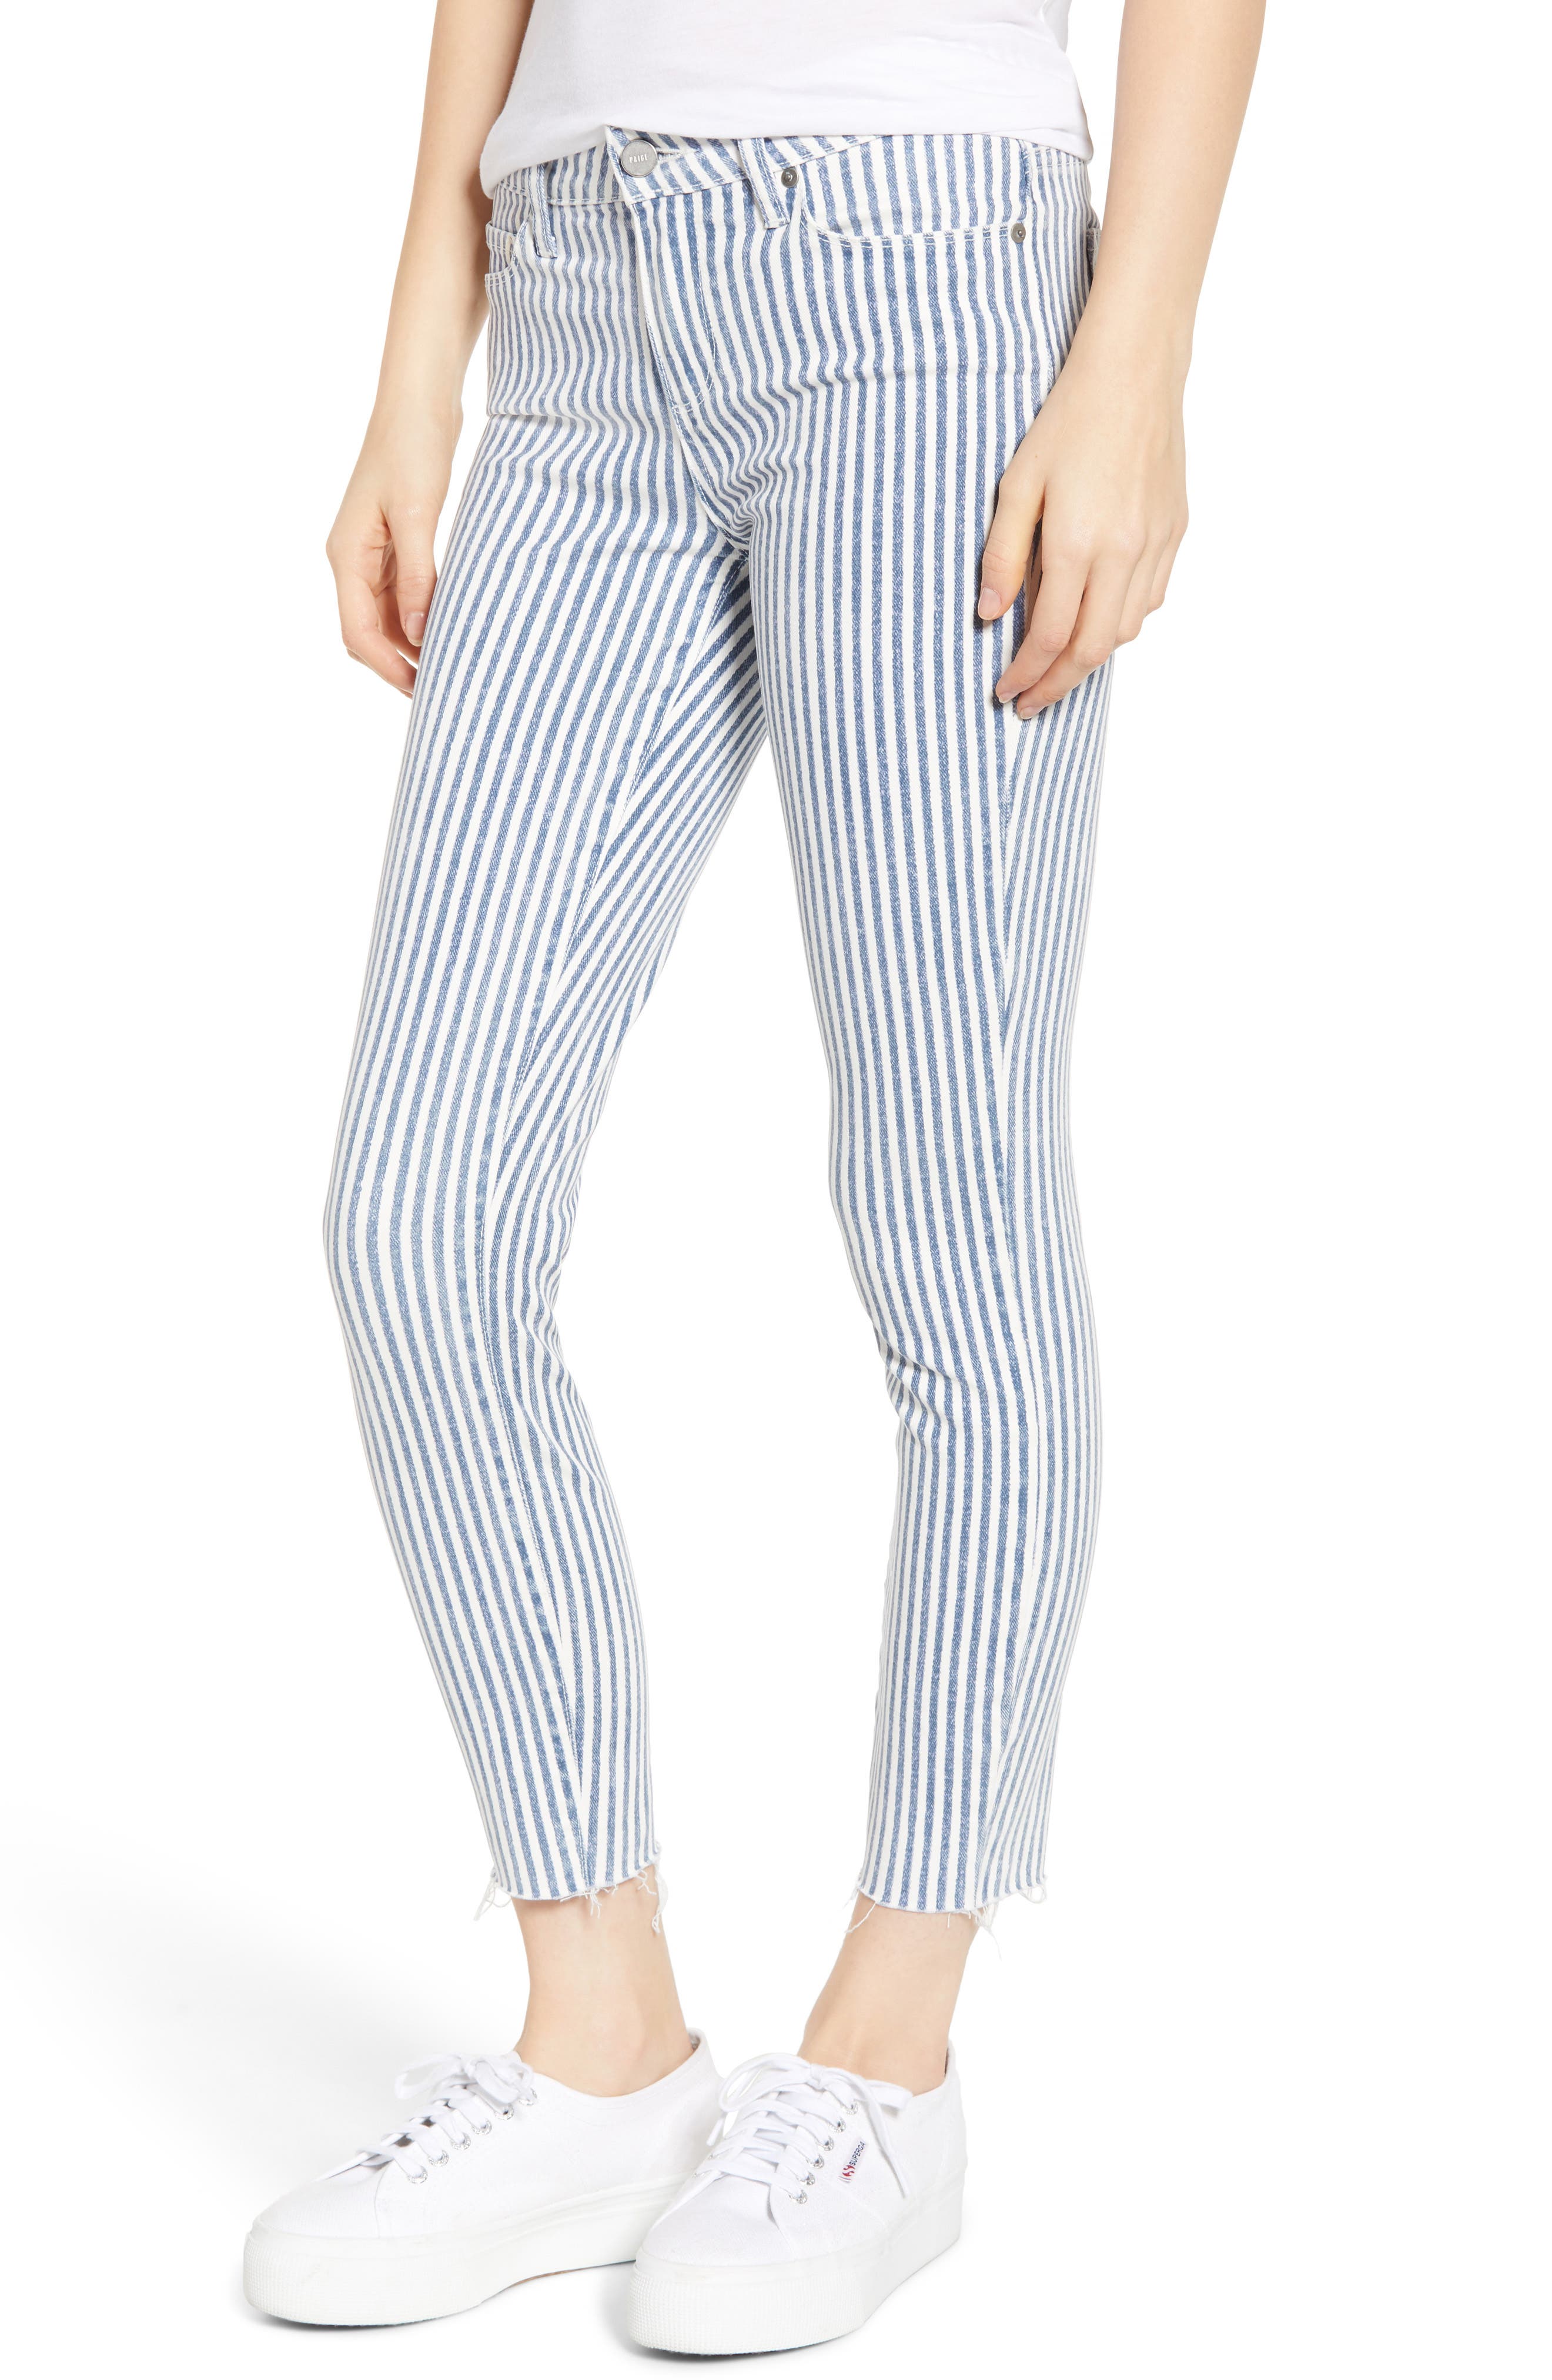 paige striped jeans